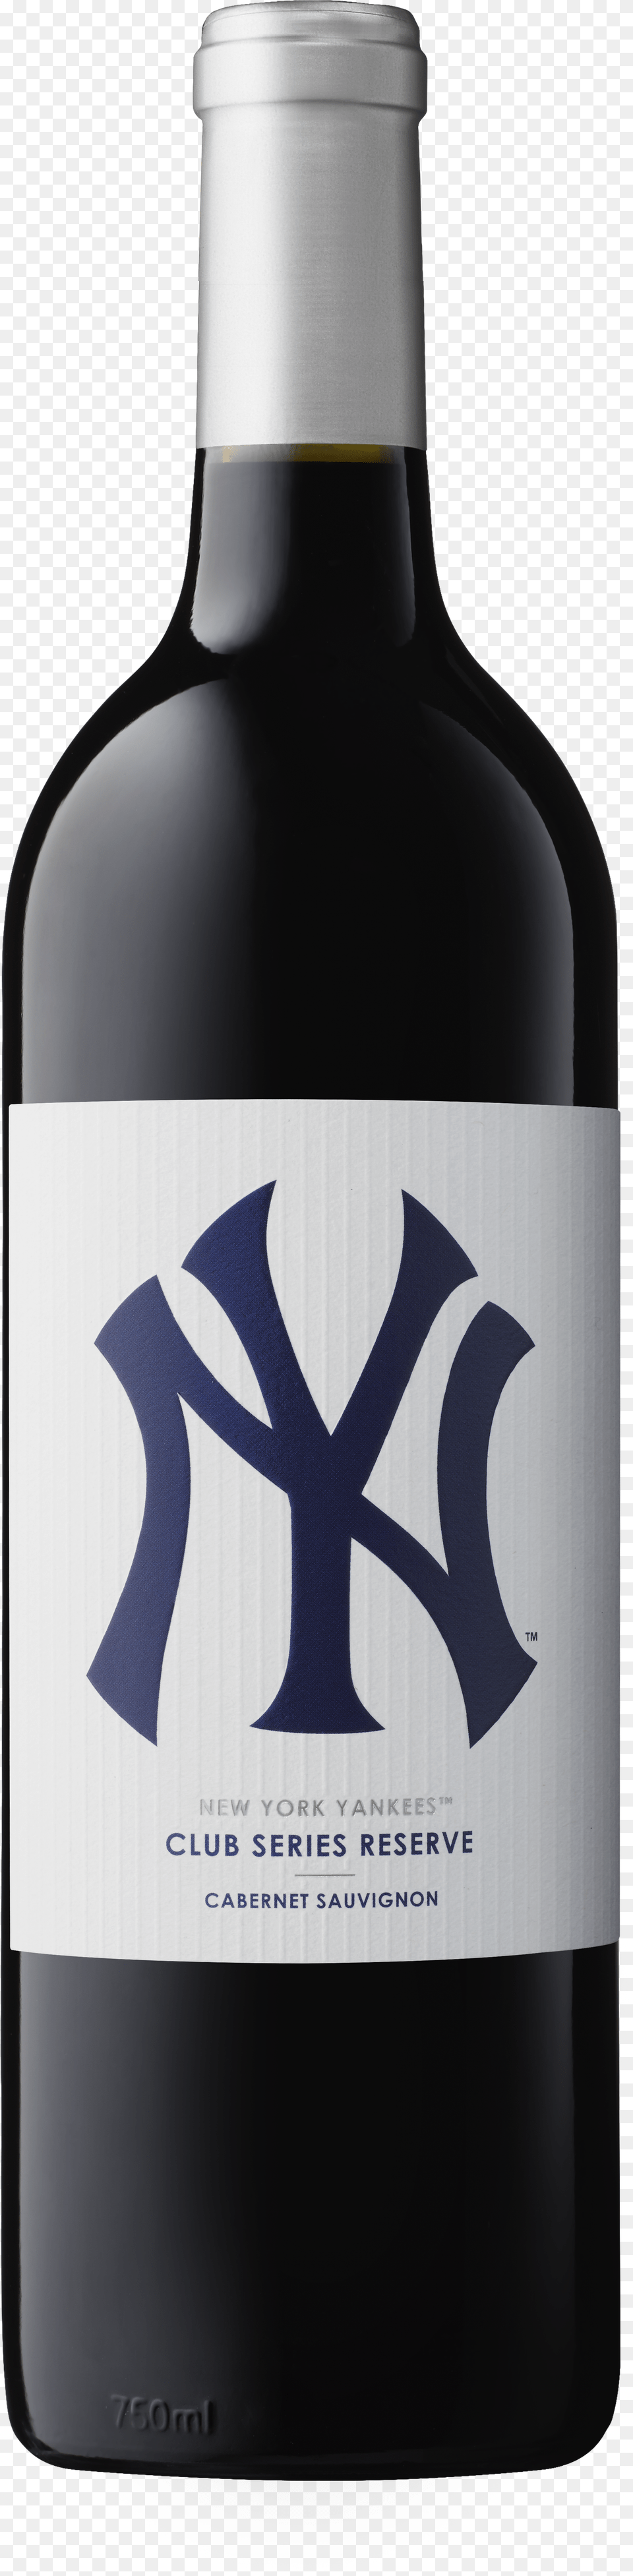 Ny Yankees Club Series Wine Free Transparent Png